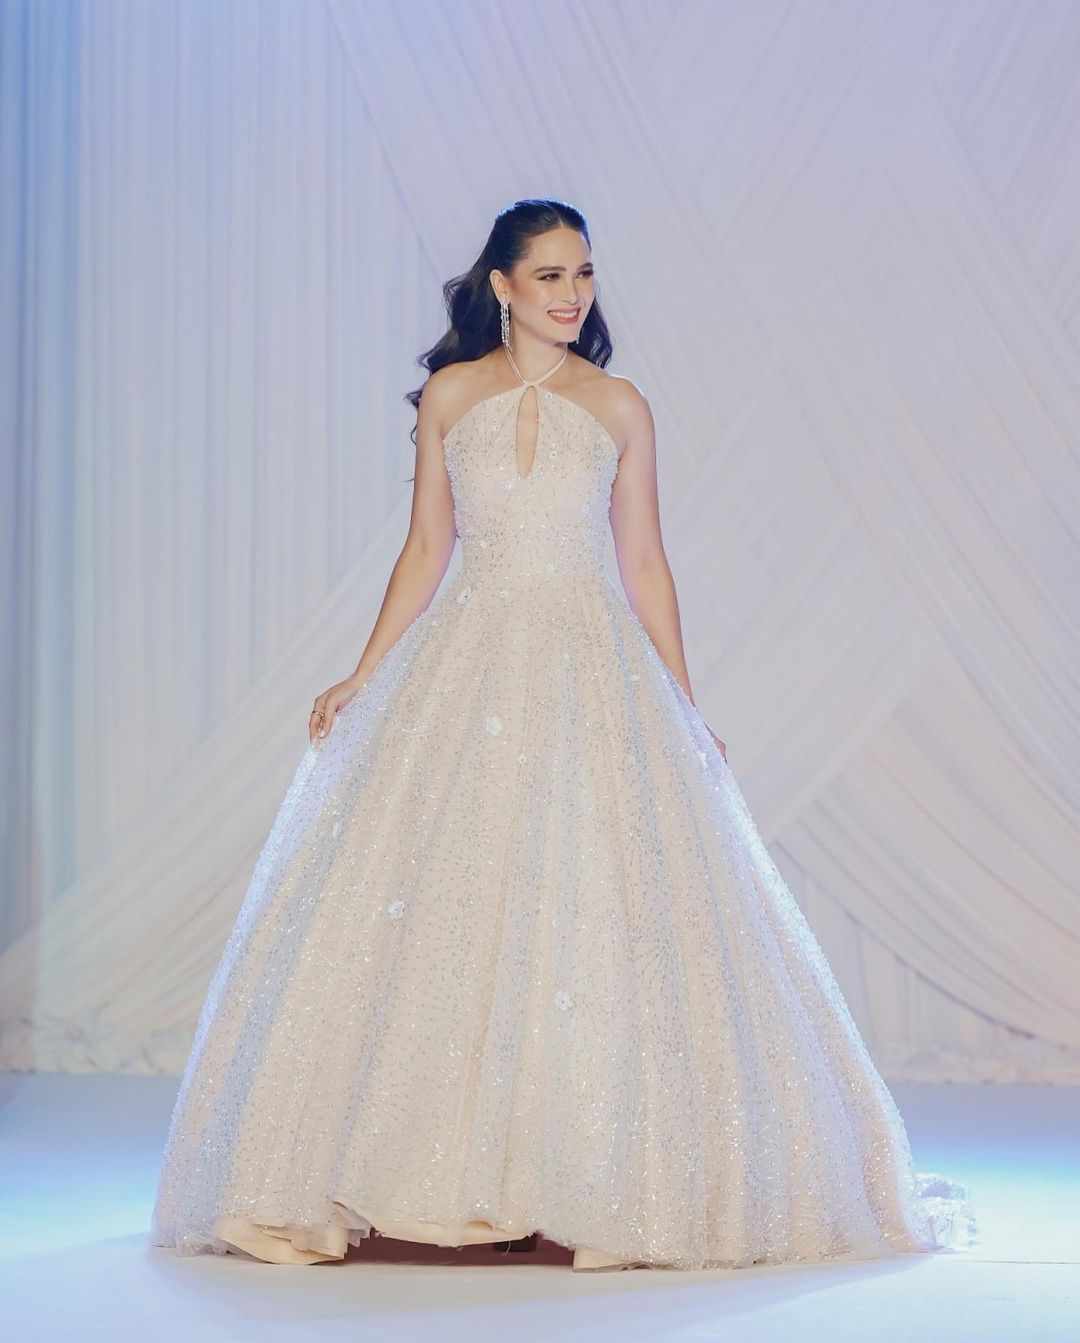 Kristine Hermosa at the Unveil bridal fashion show